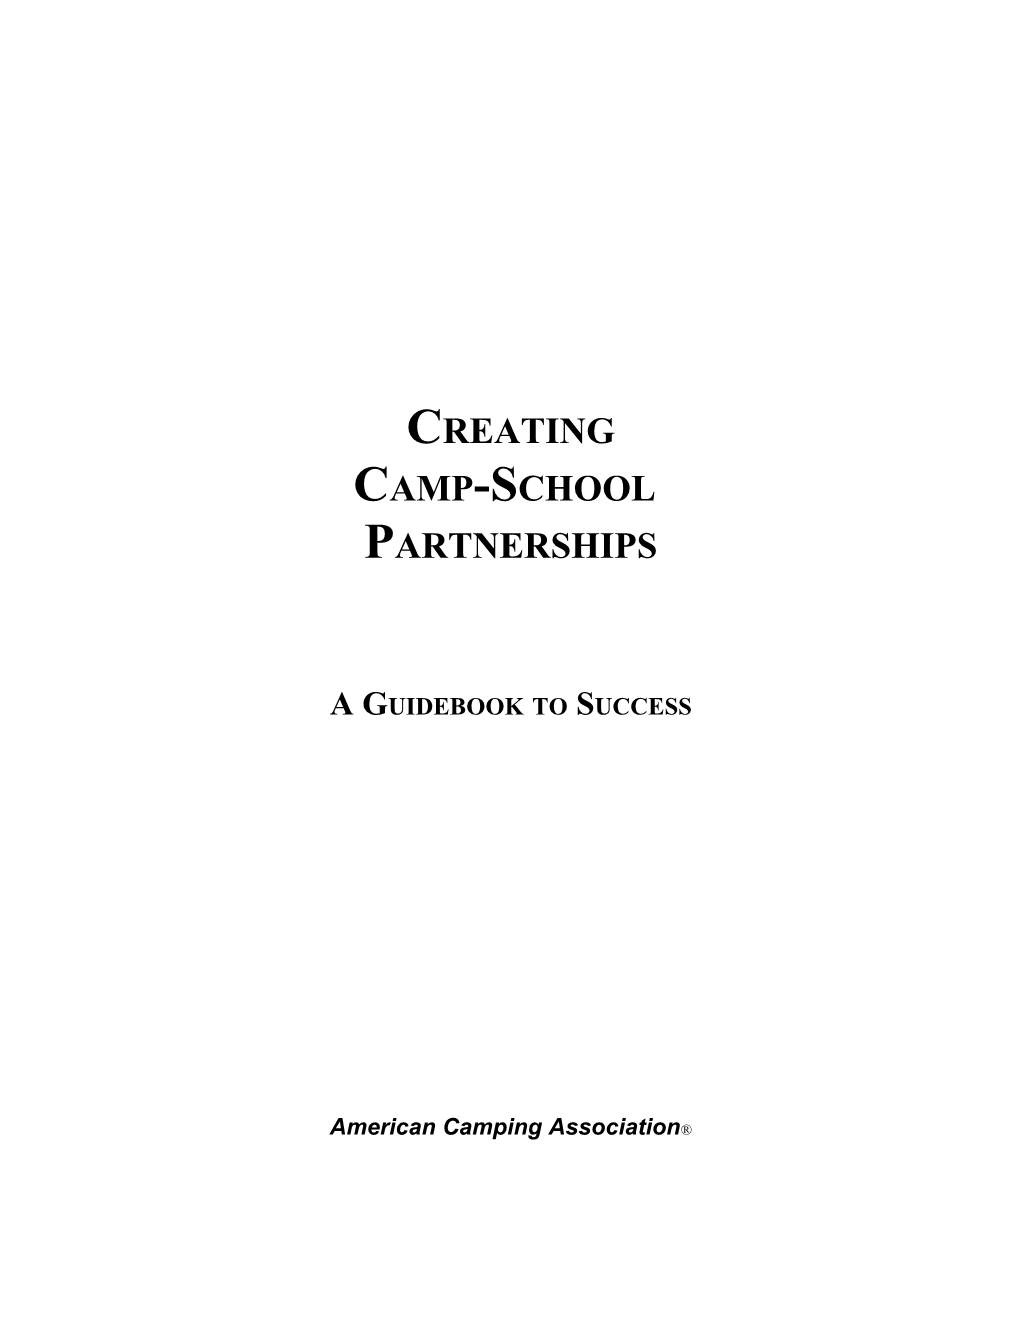 Creating Camp-School Partnerships